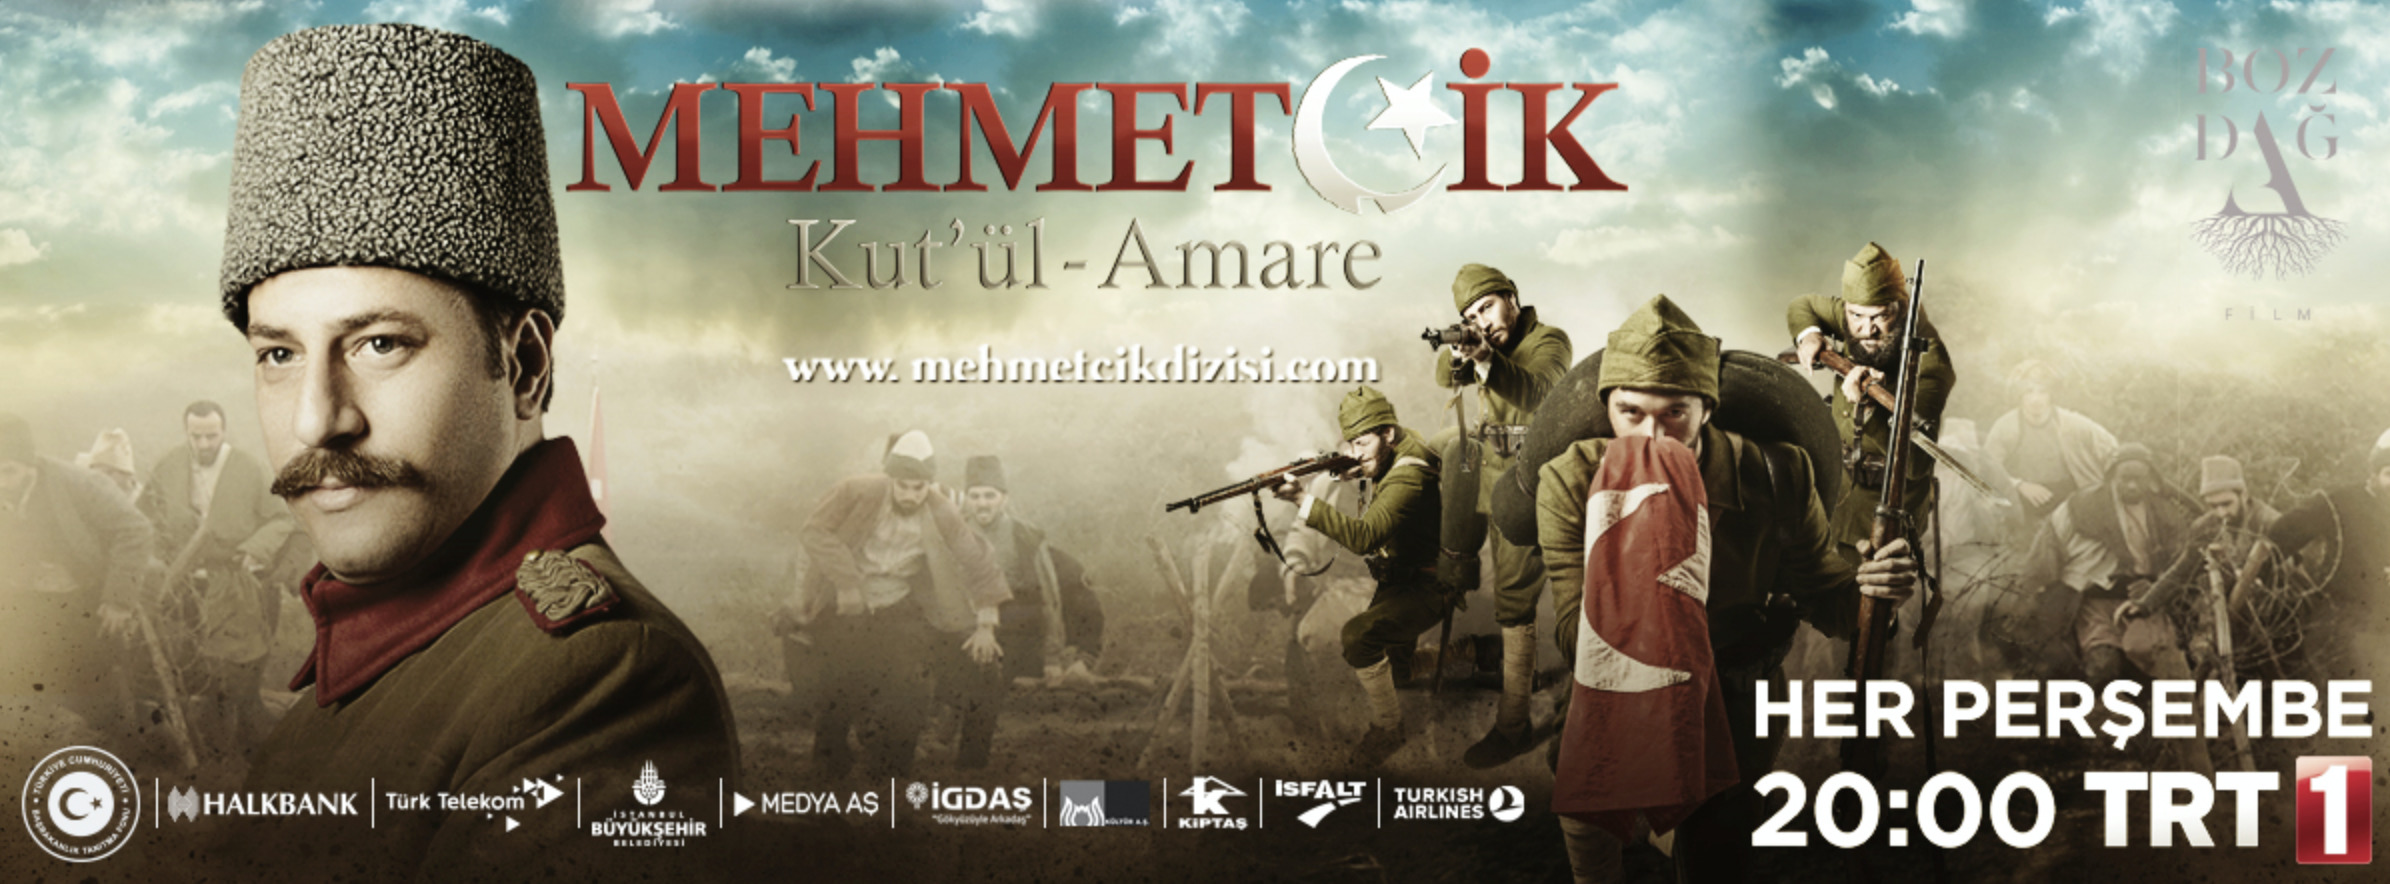 Mega Sized TV Poster Image for Mehmetçik Kut'ül Amare (#31 of 41)